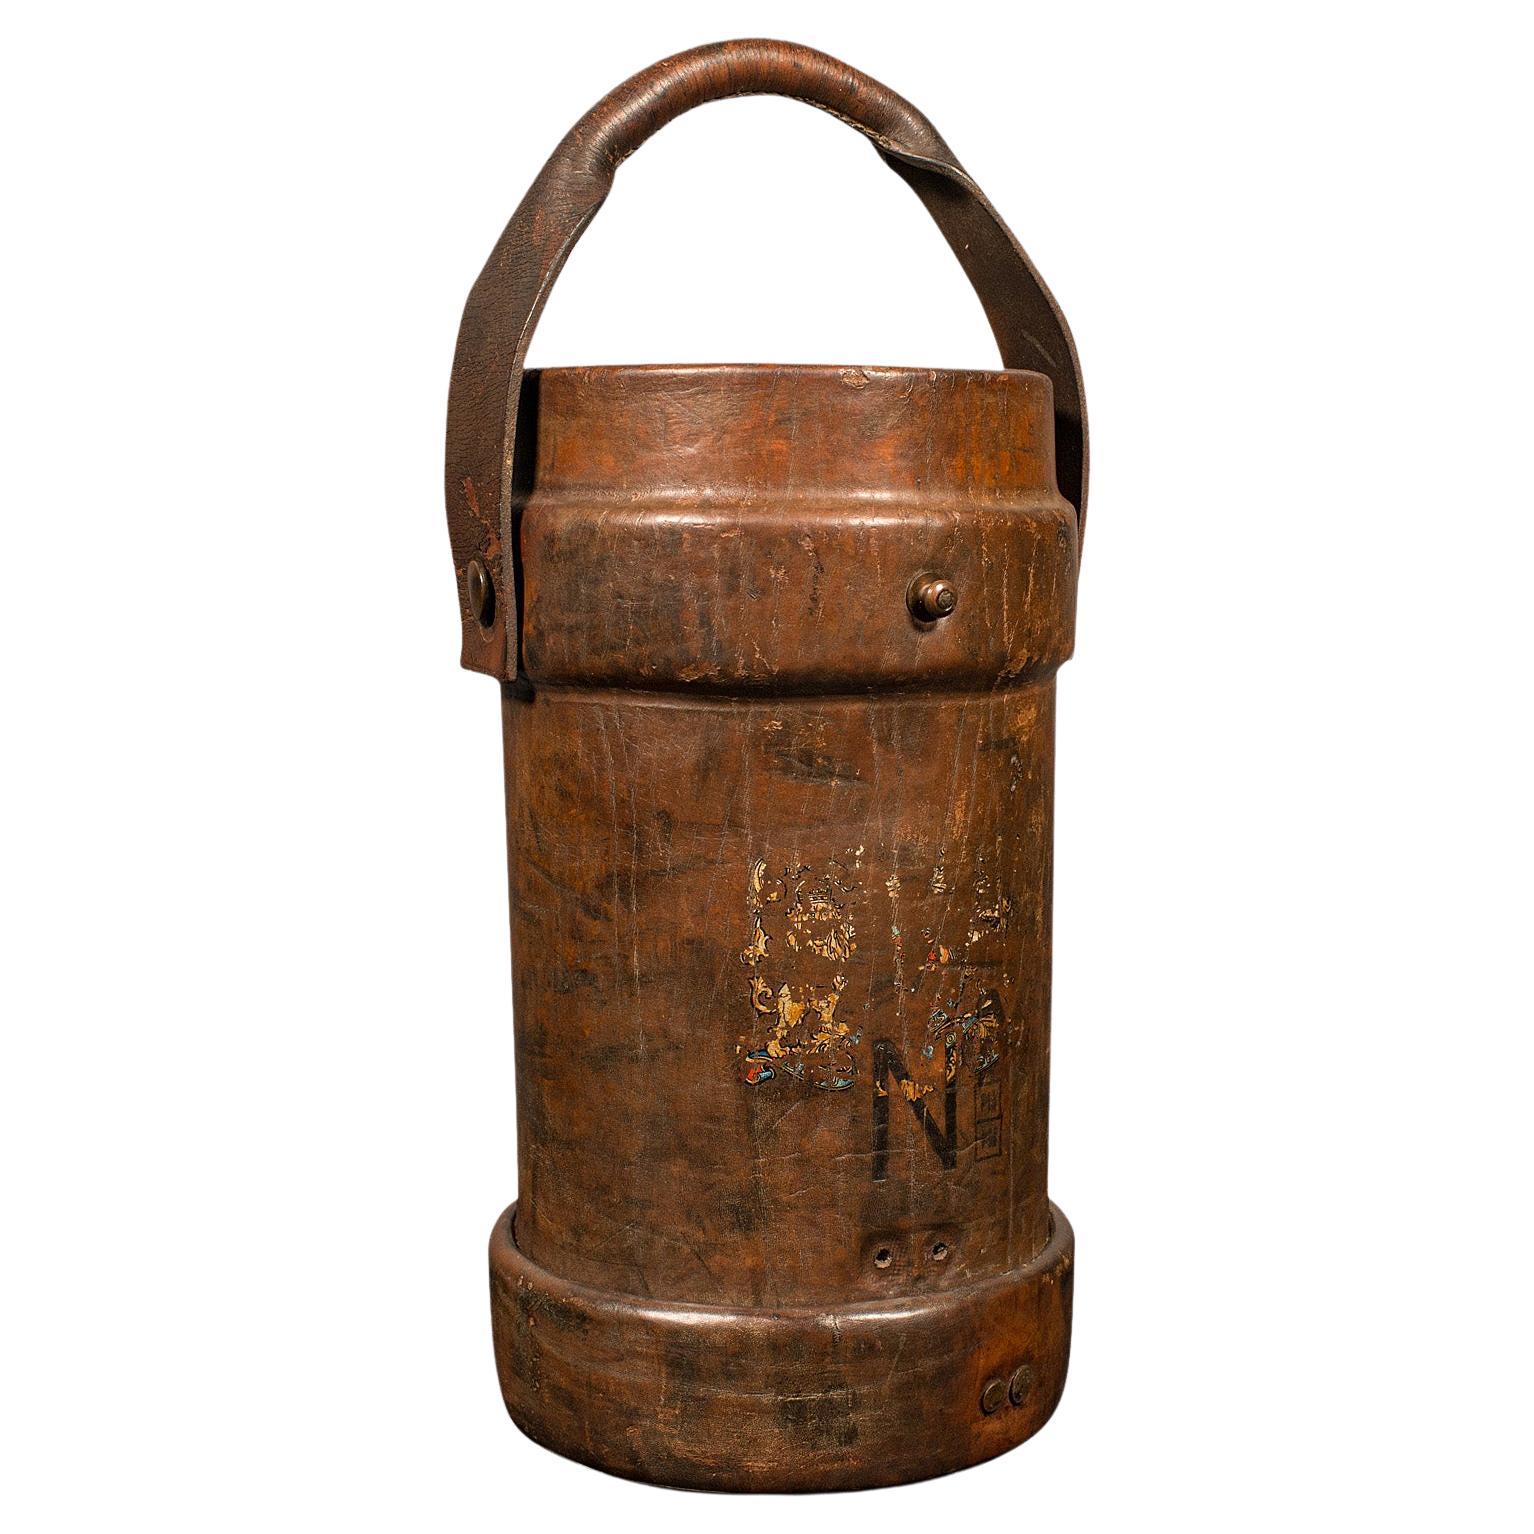 Vintage Decorative Stick Stand, English Leather Basket, Storage Bin, Mid-Century